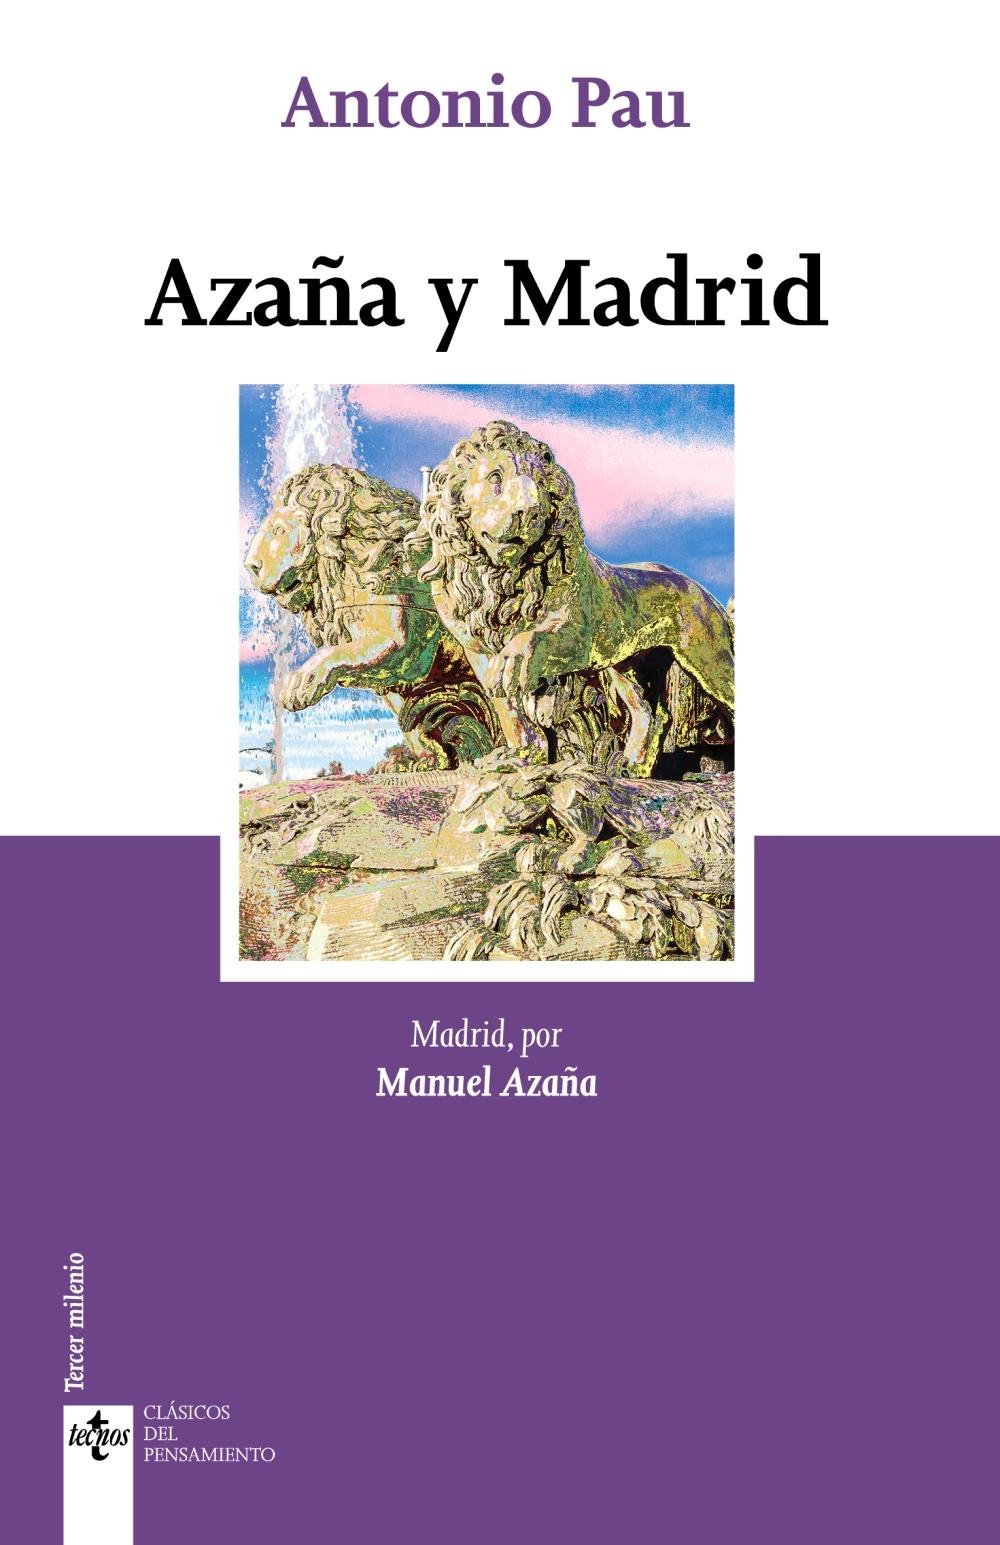 Azaña y Madrid "Madrid, por Manuel Azaña". 